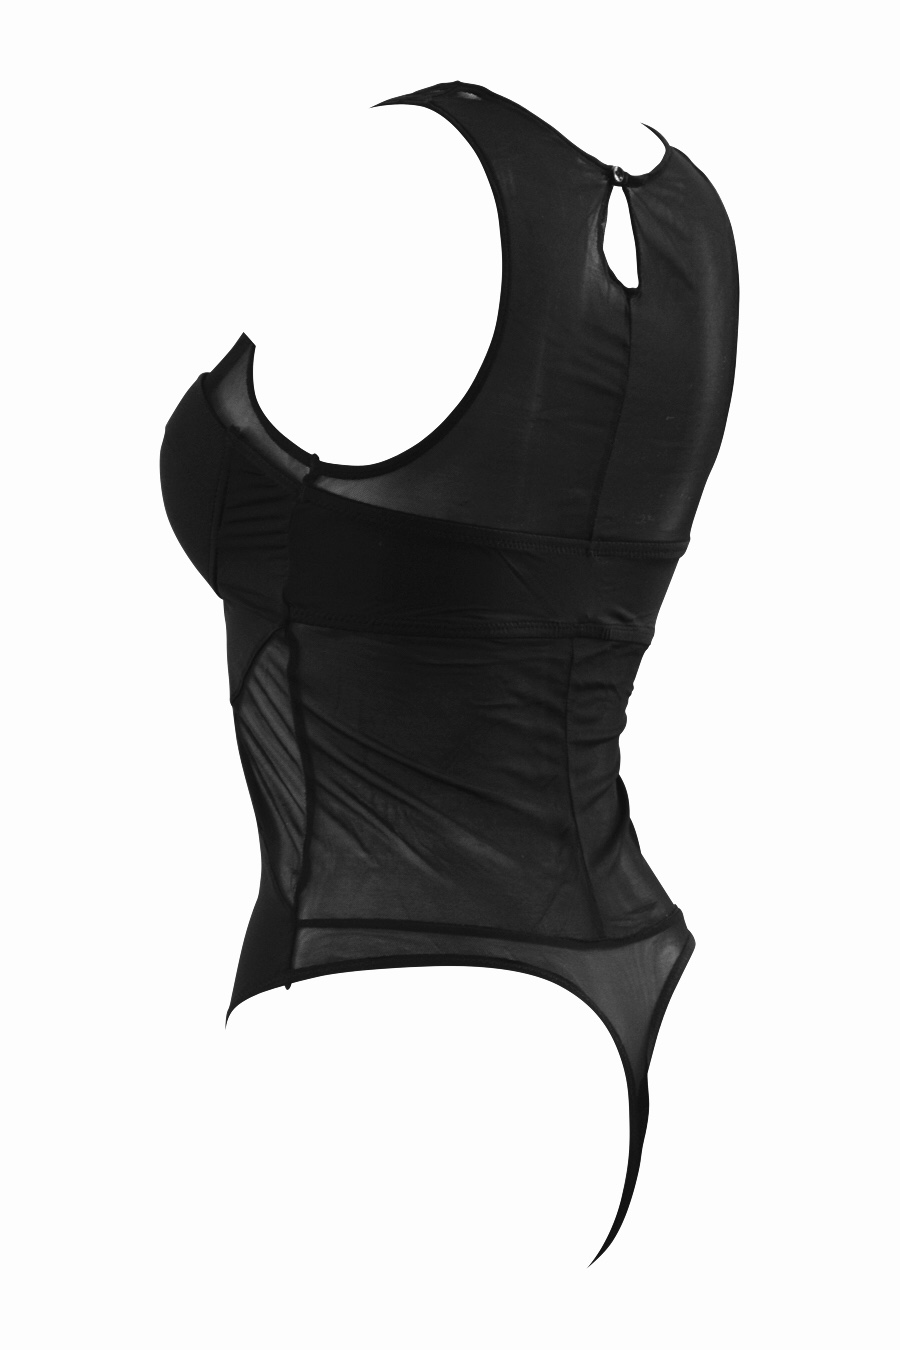 Musta string-bodysuit, jossa on topatut kupit